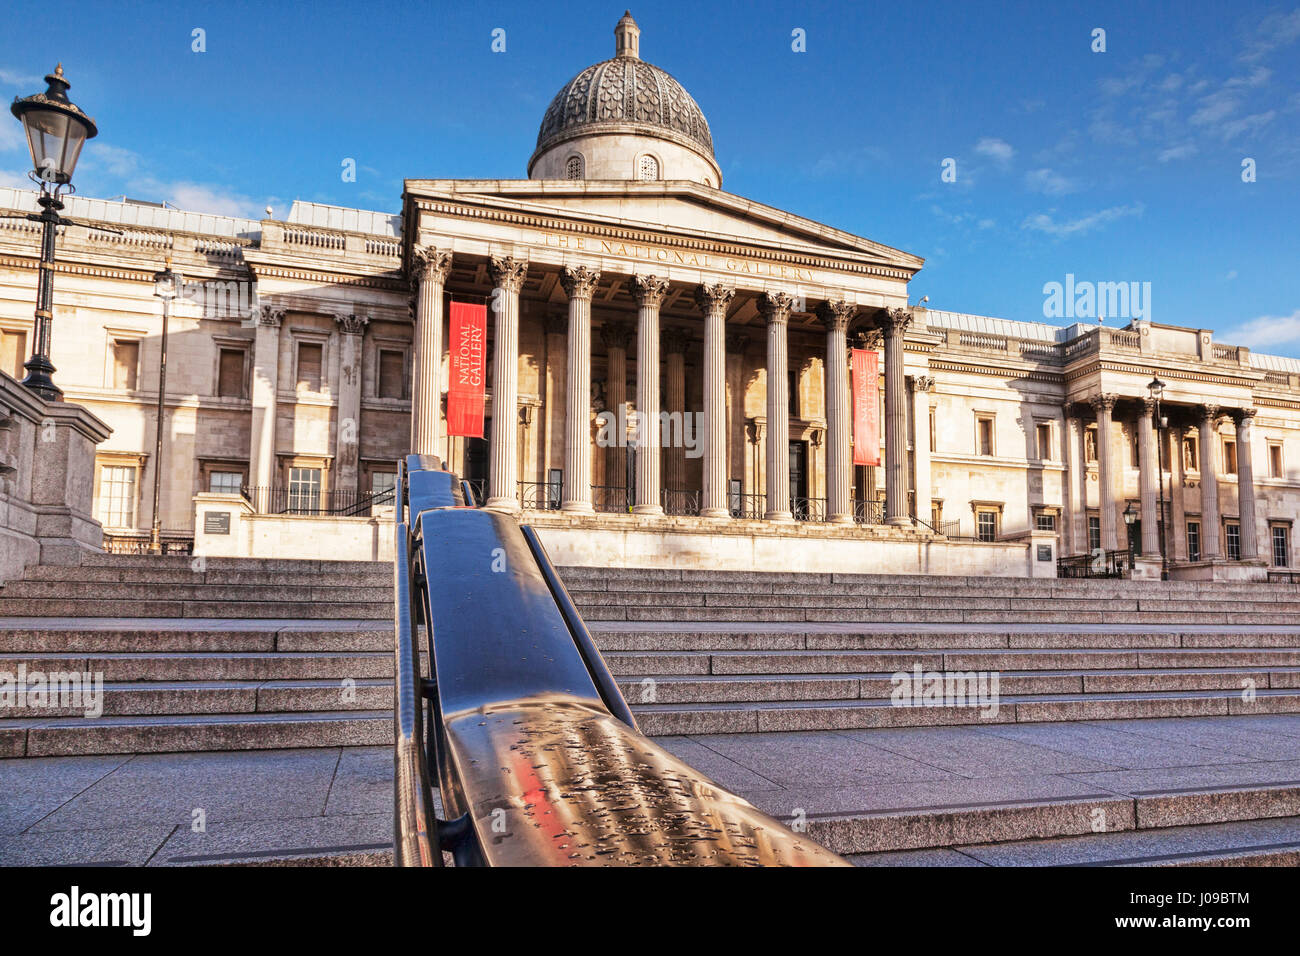 National Gallery, Trafalgar Square, London England UK Stock Photo